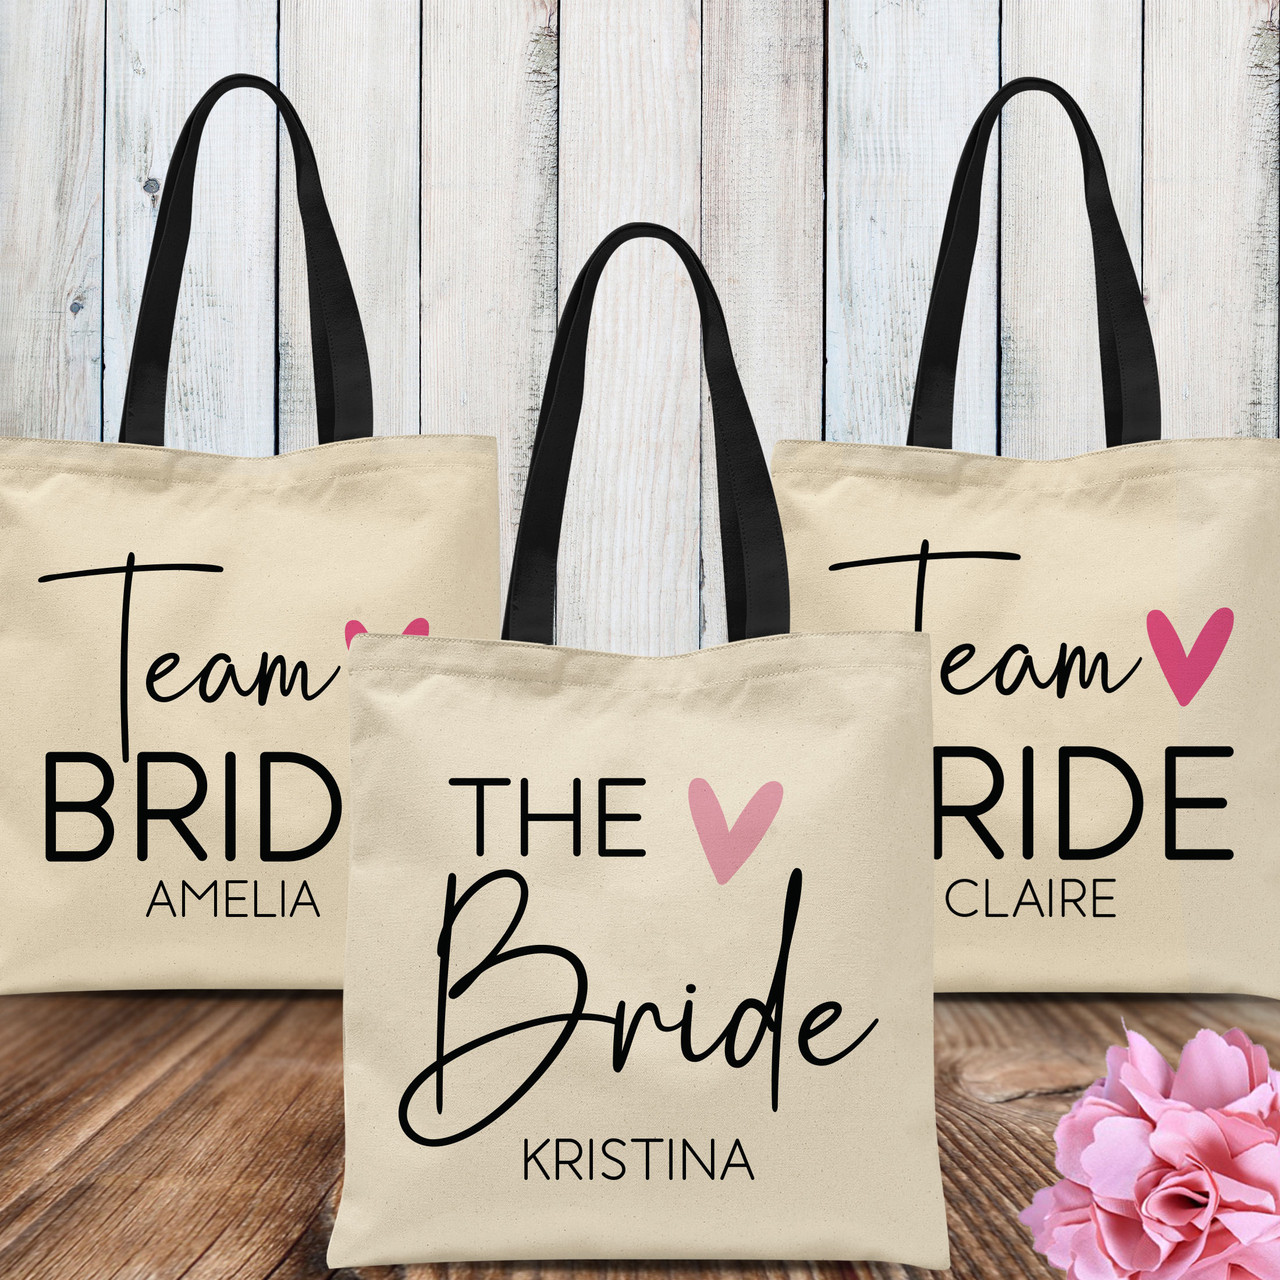 Totes a Bridesmaid Bridal Party Canvas Tote Bags